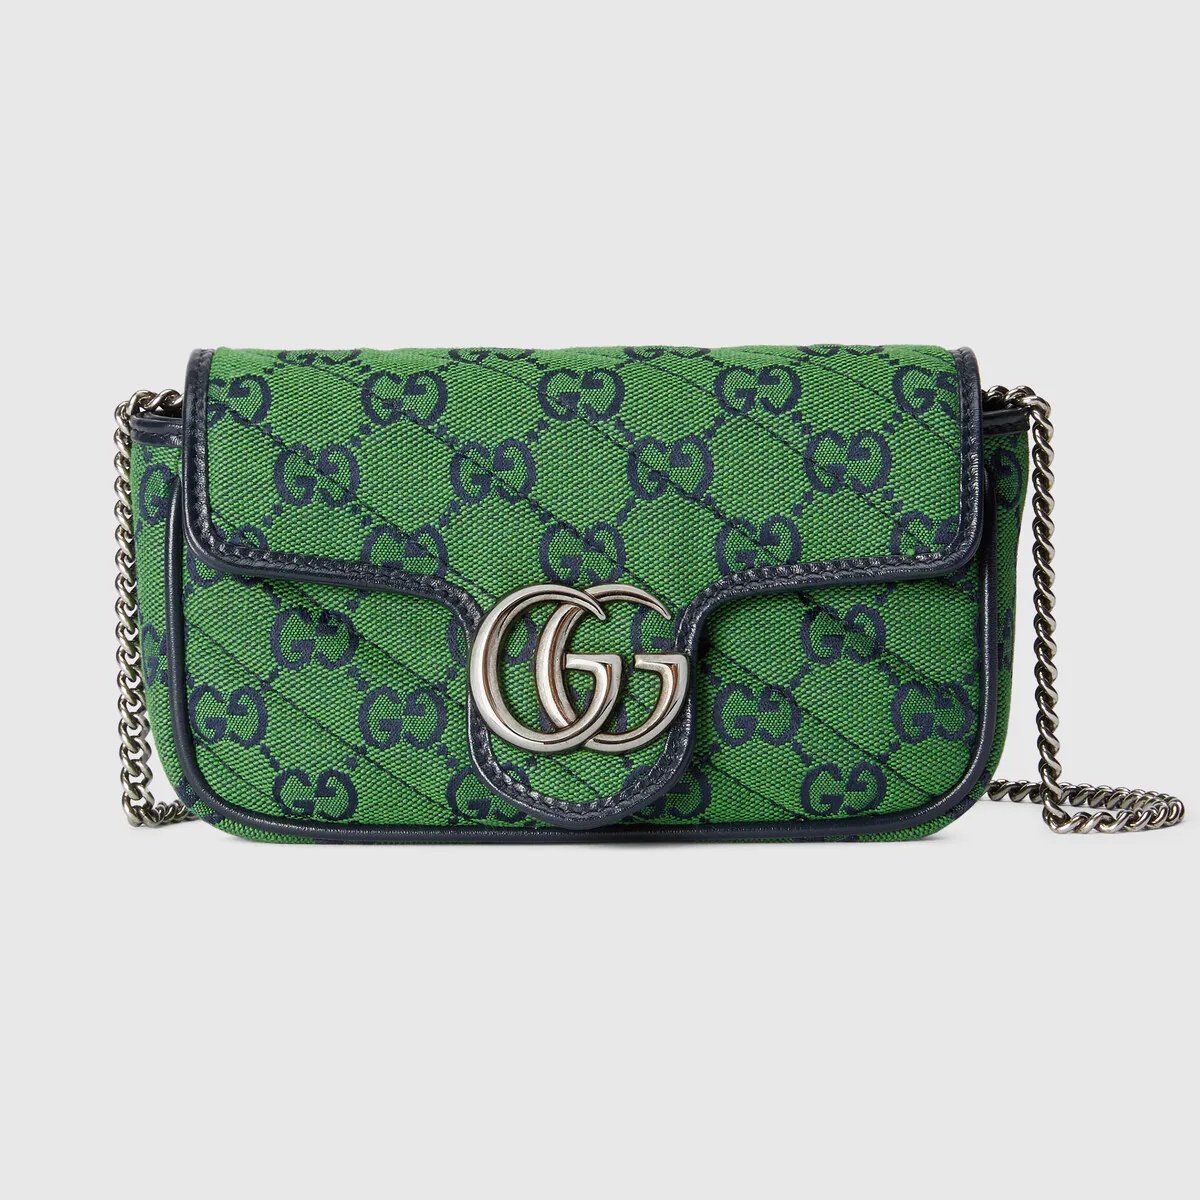 Gucci GG Marmont Matelasse Leather Super Mini Bag (Varied Colors)